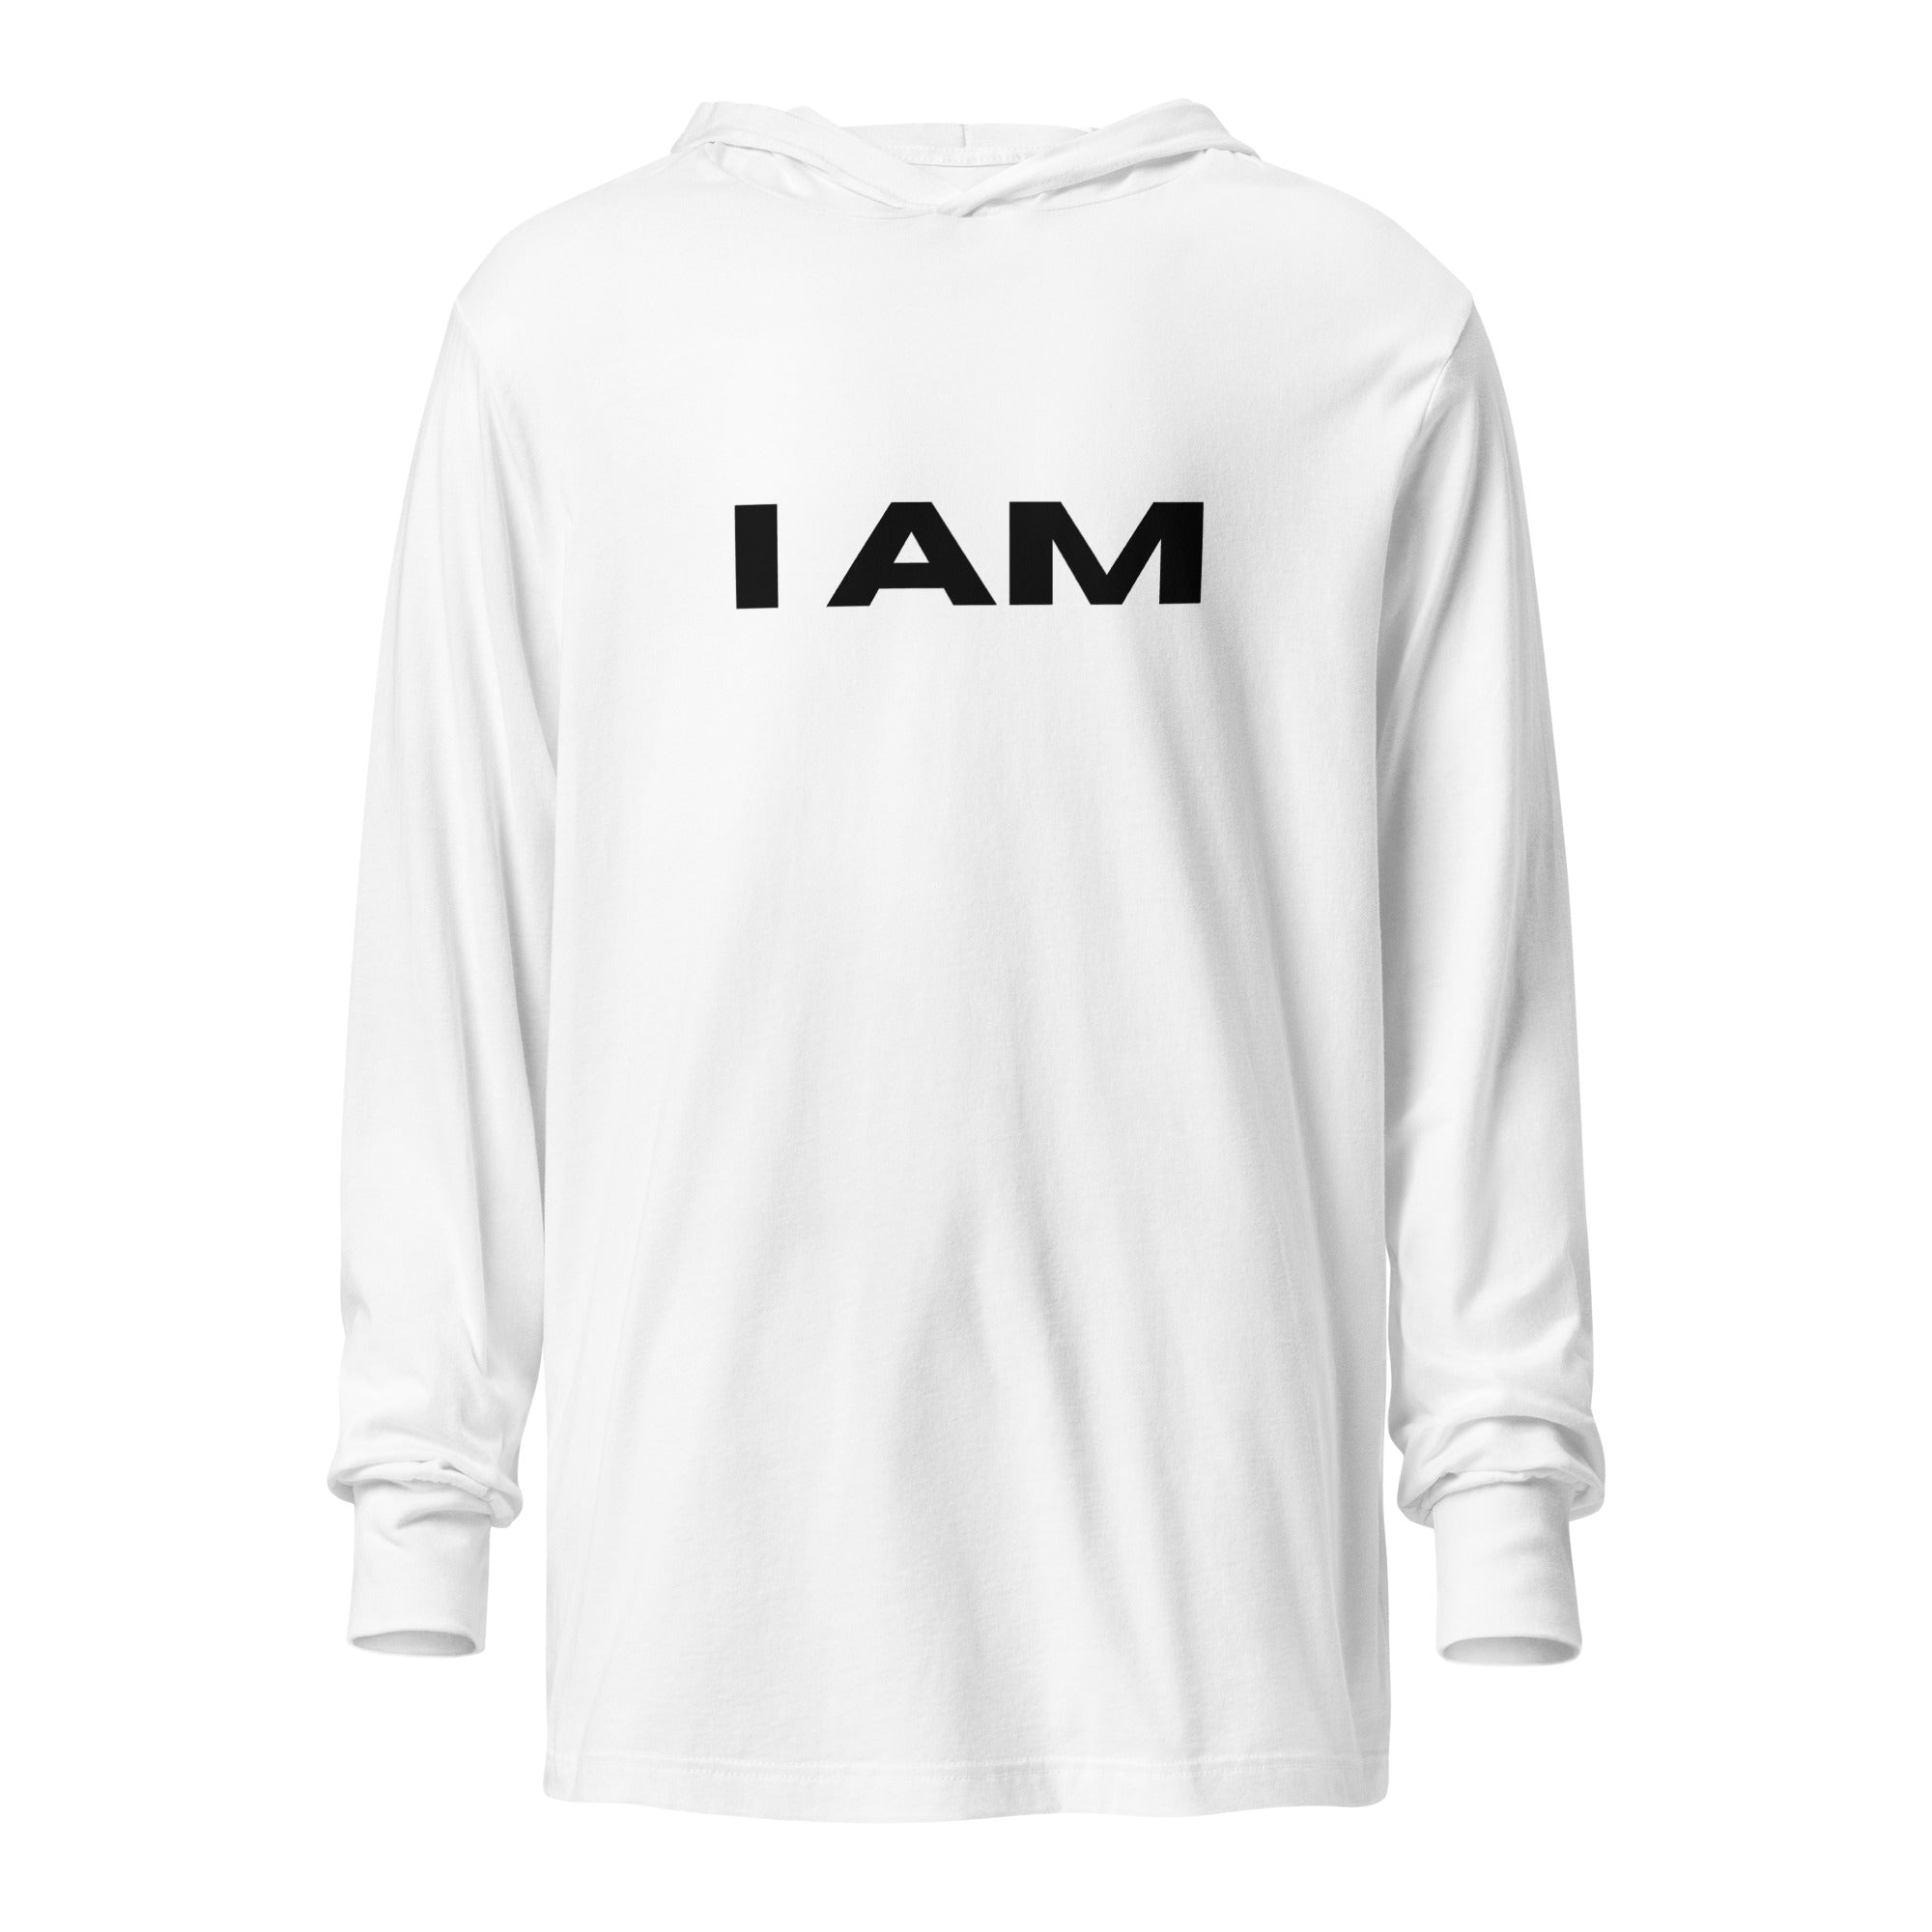 "I AM" POSITIVE AFFIRMATION HOODED LONG-SLEEVE TEE